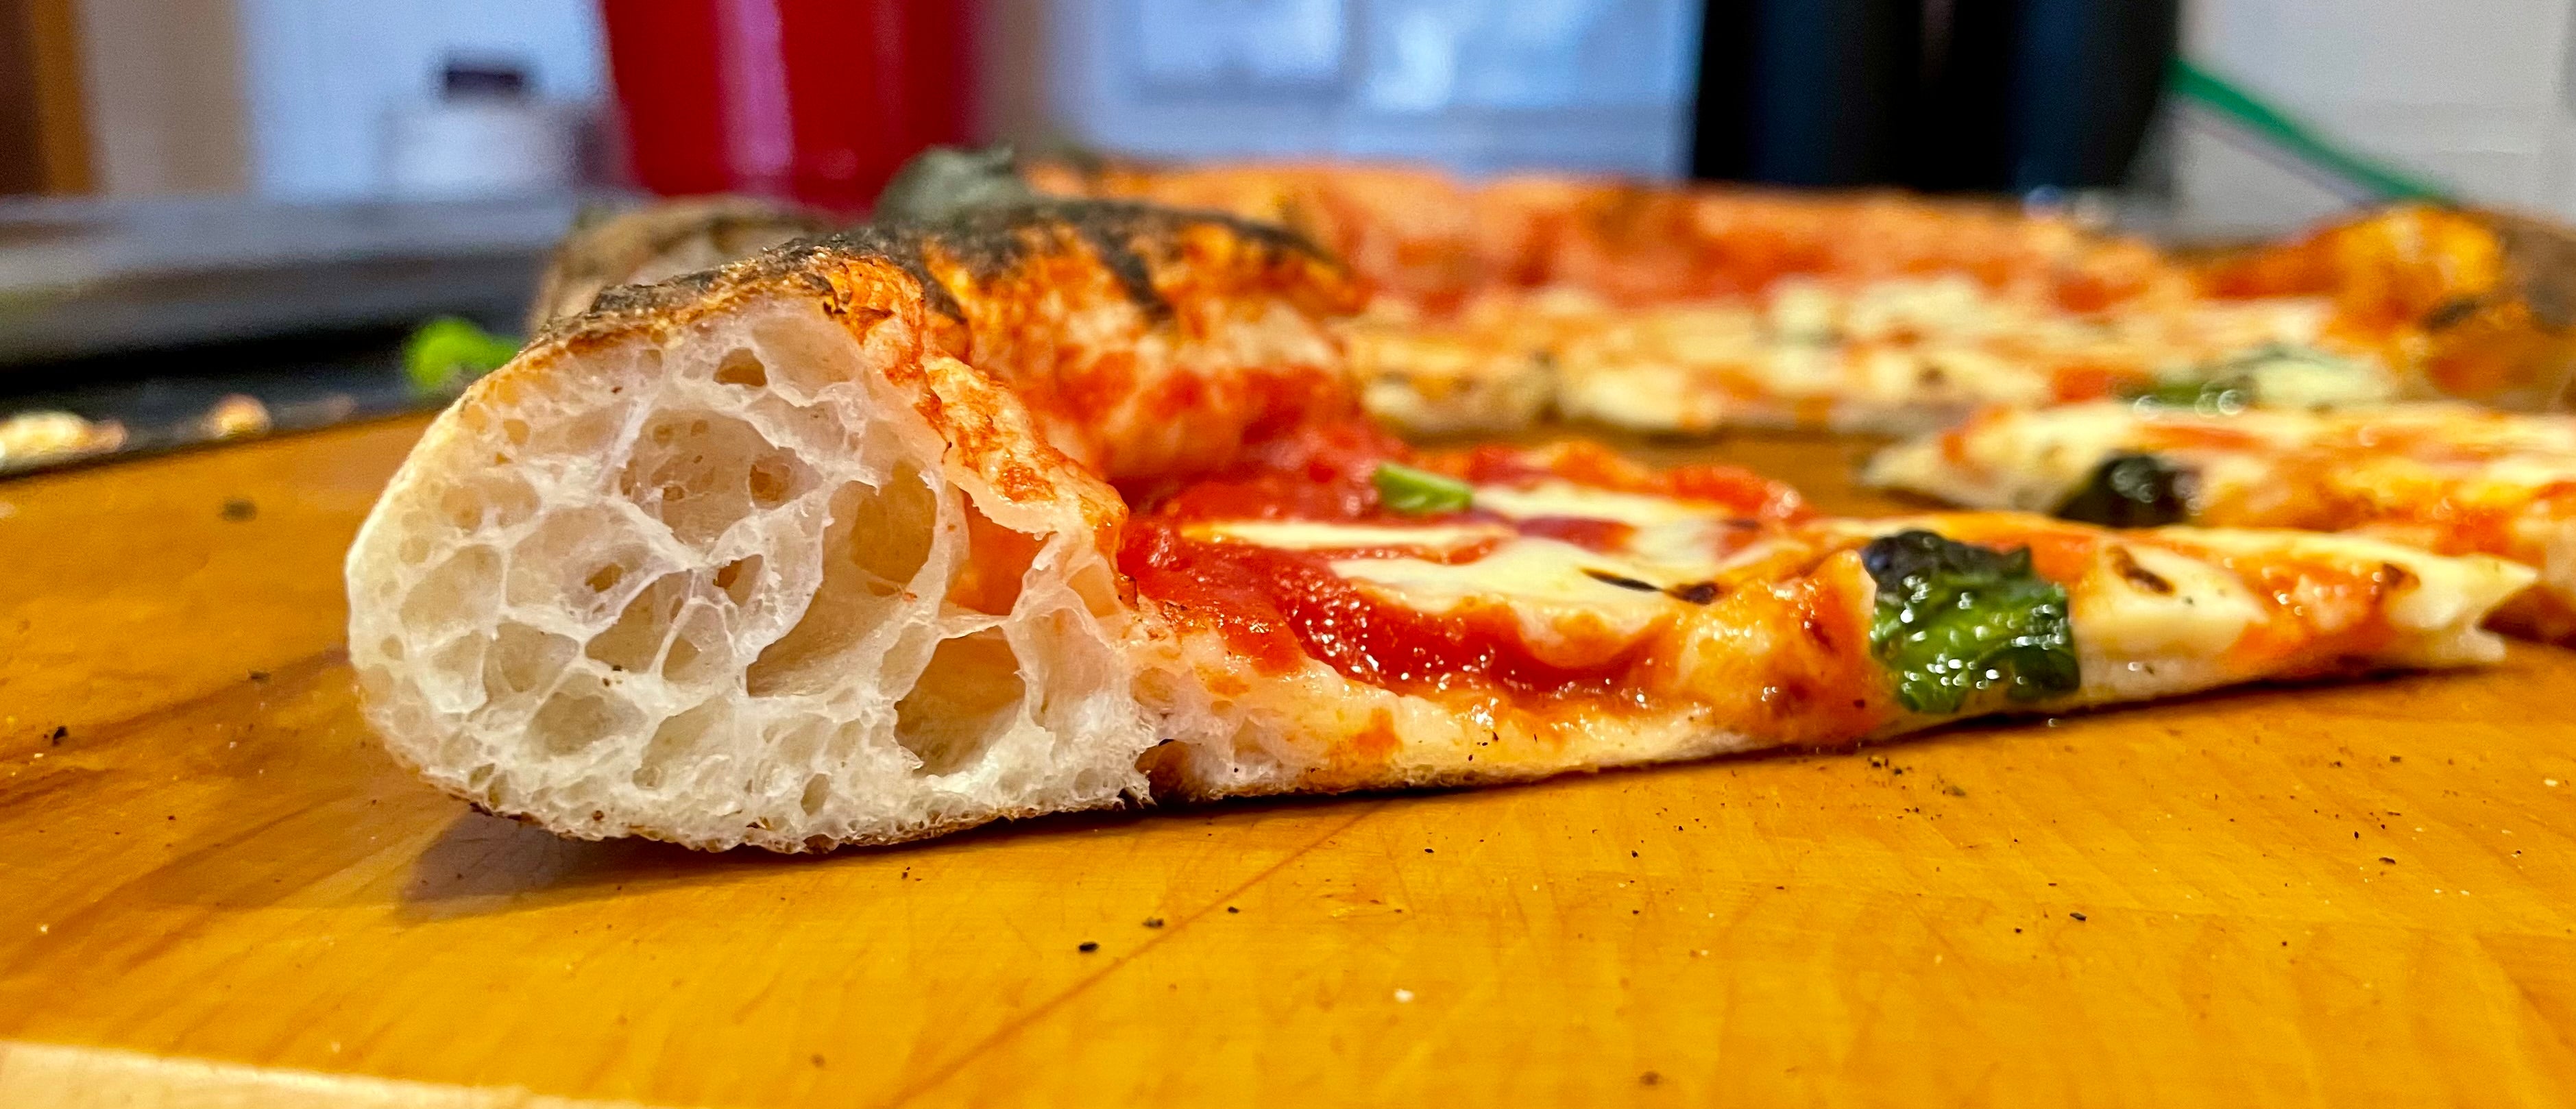 Neapolitan Pizza Recipe For Your Home Oven